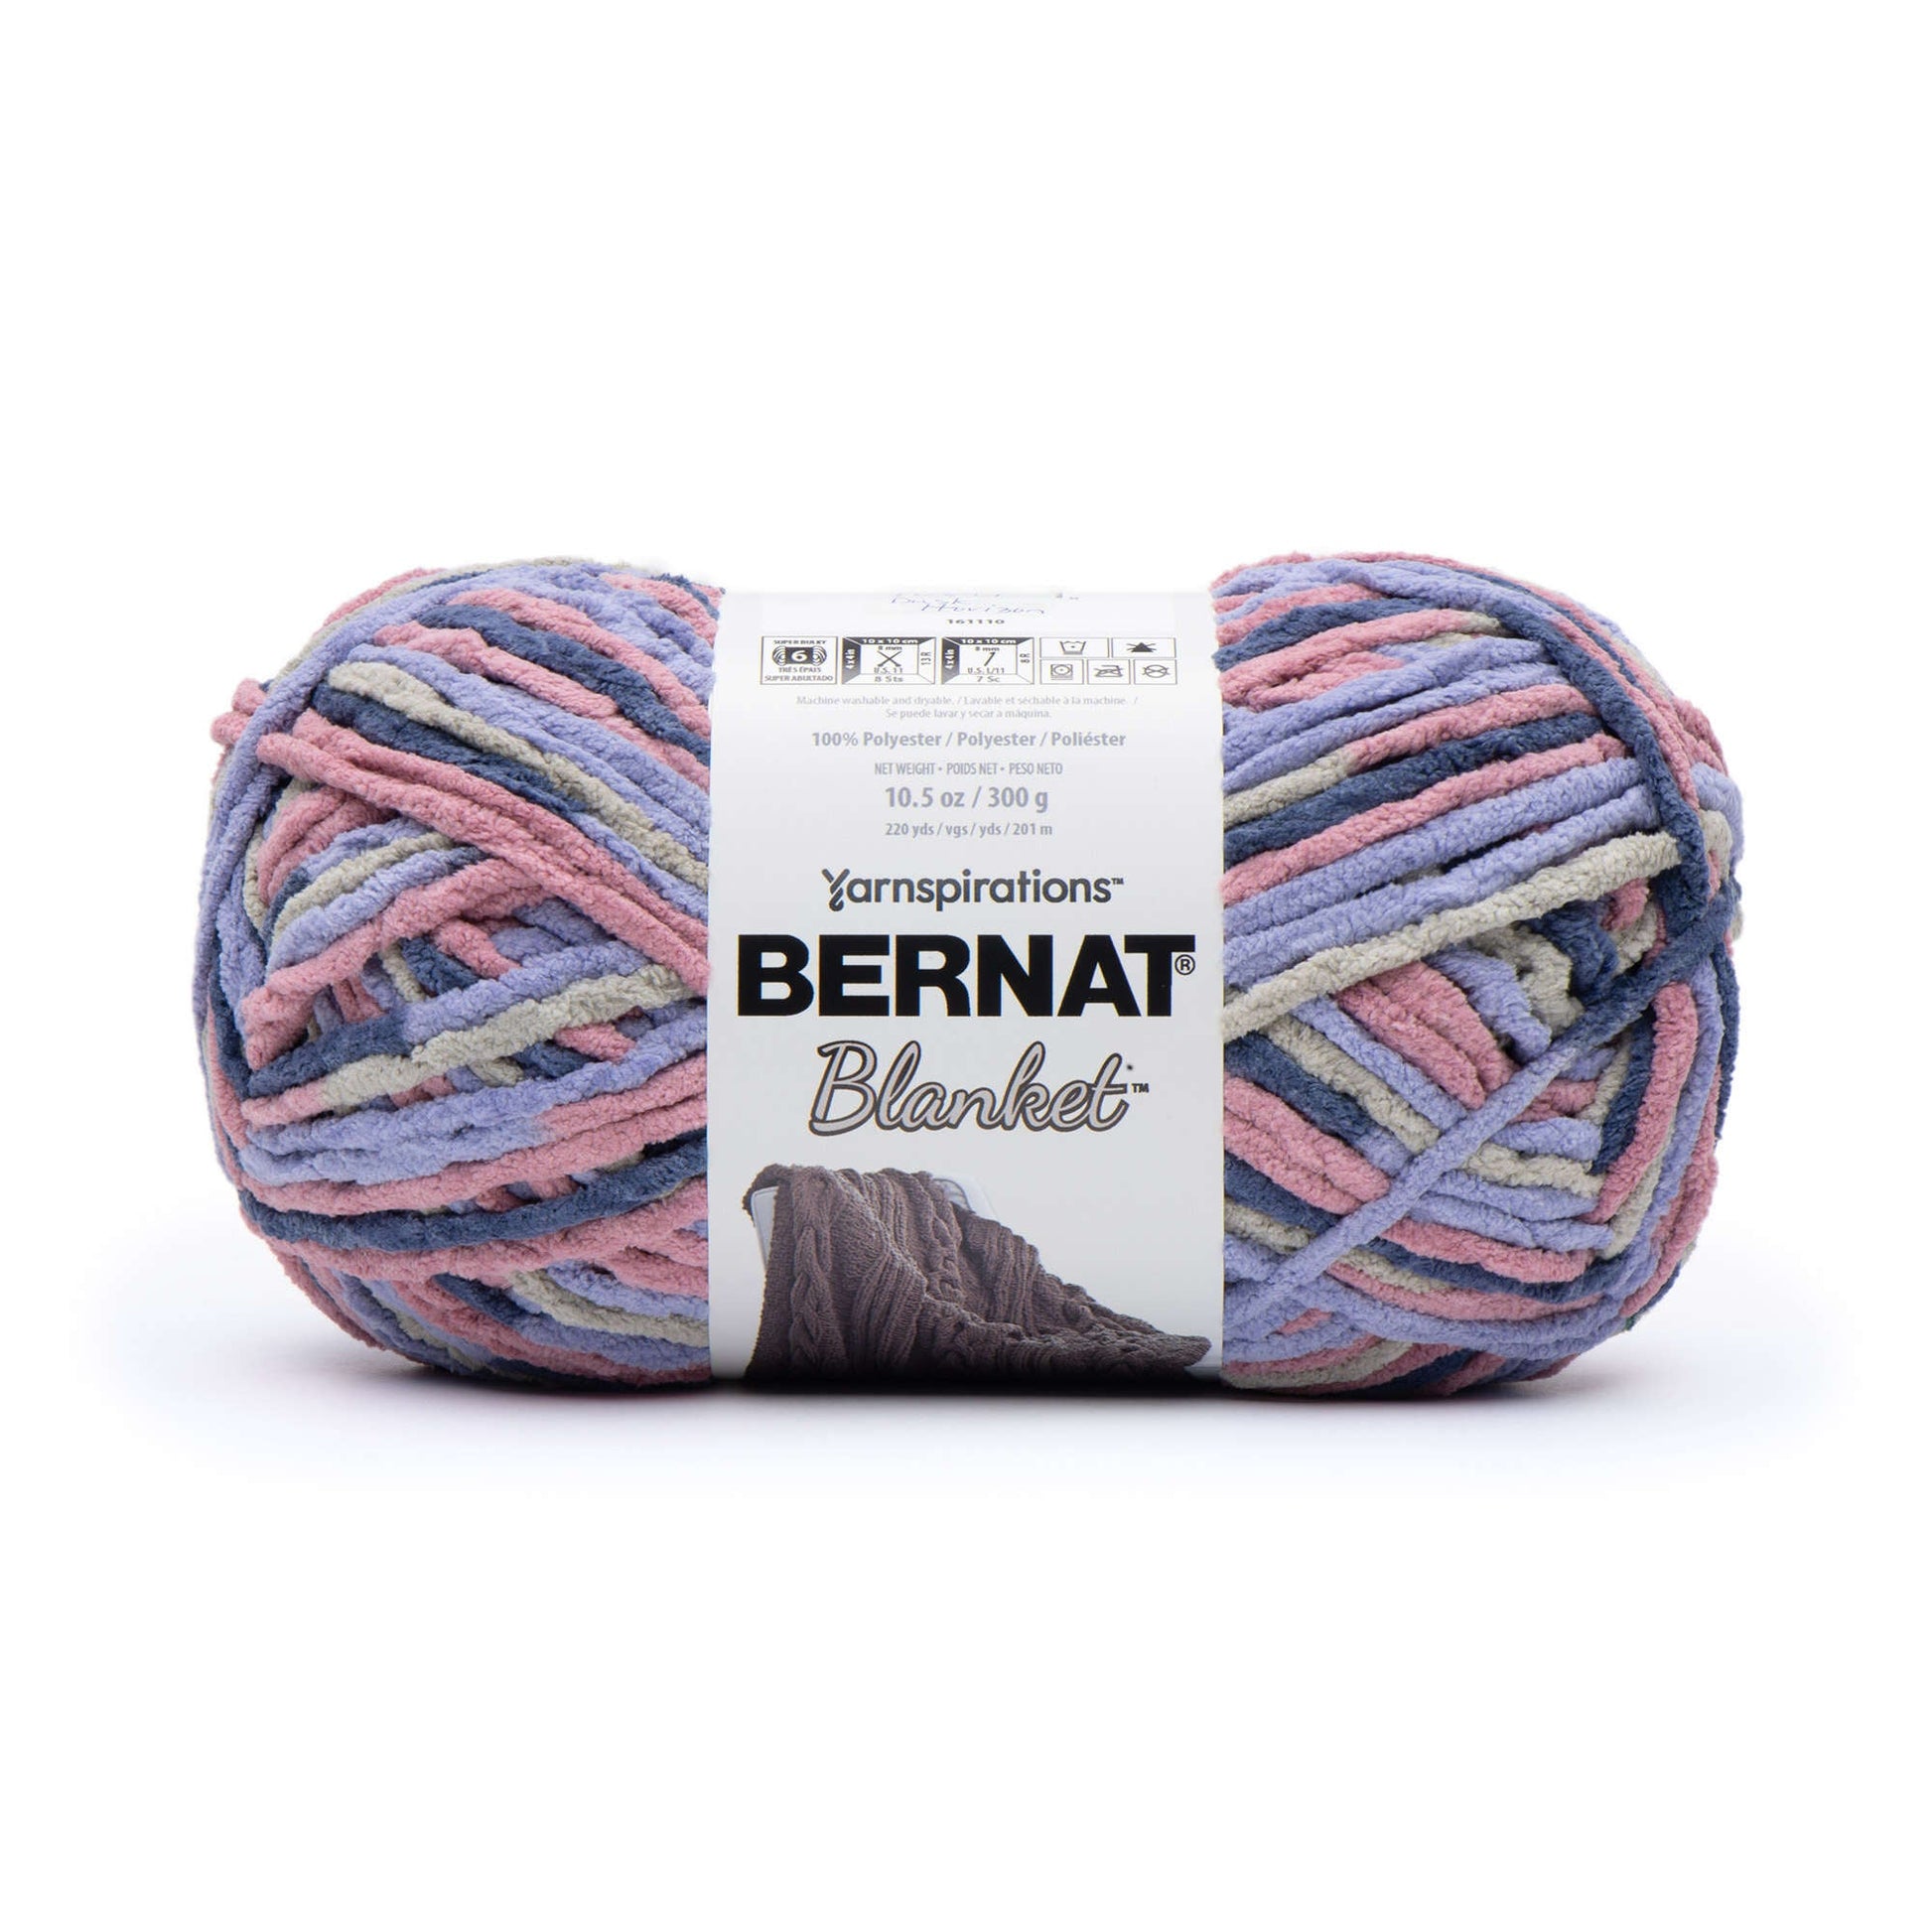 Bernat Blanket Yarn 10.5oz, Birch